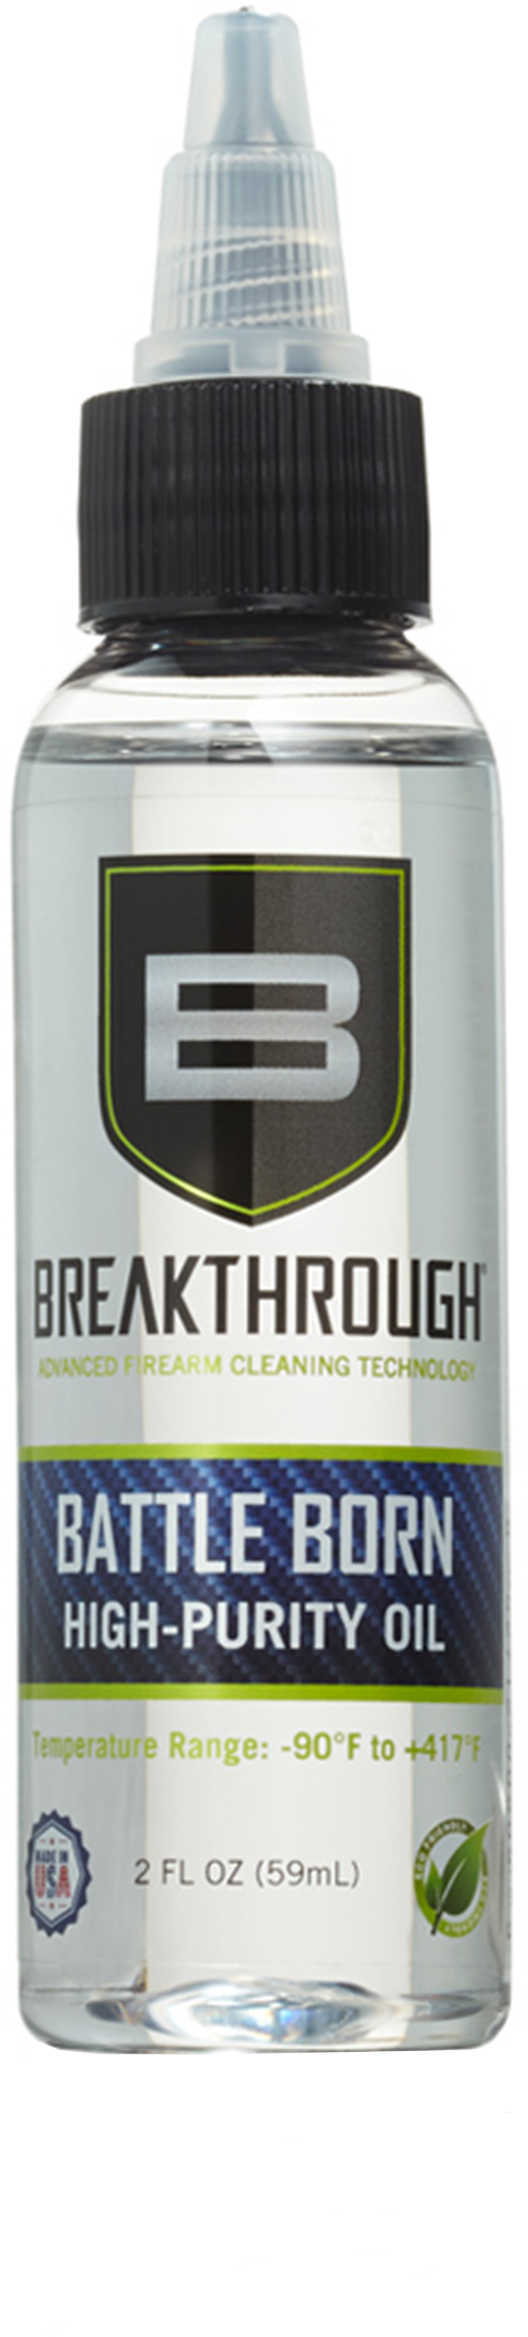 Breakthrough Clean Technology Bb High Purity Oil 2 Oz Bottle